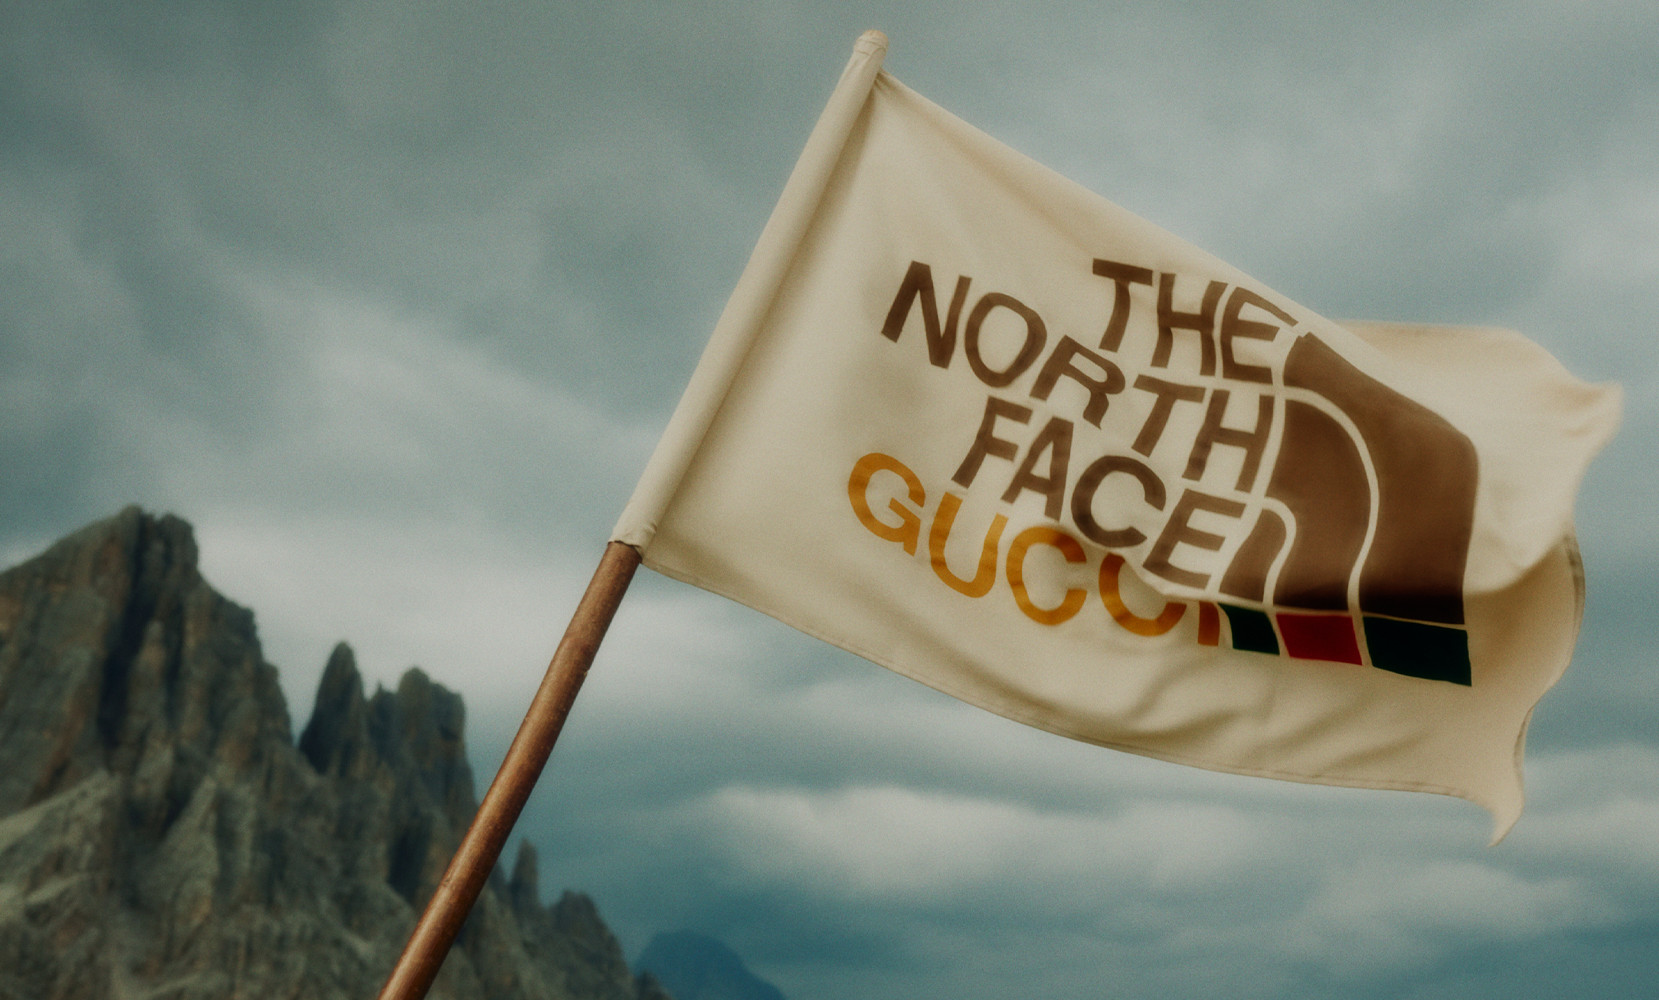 Gucci x The North Face Collaboration